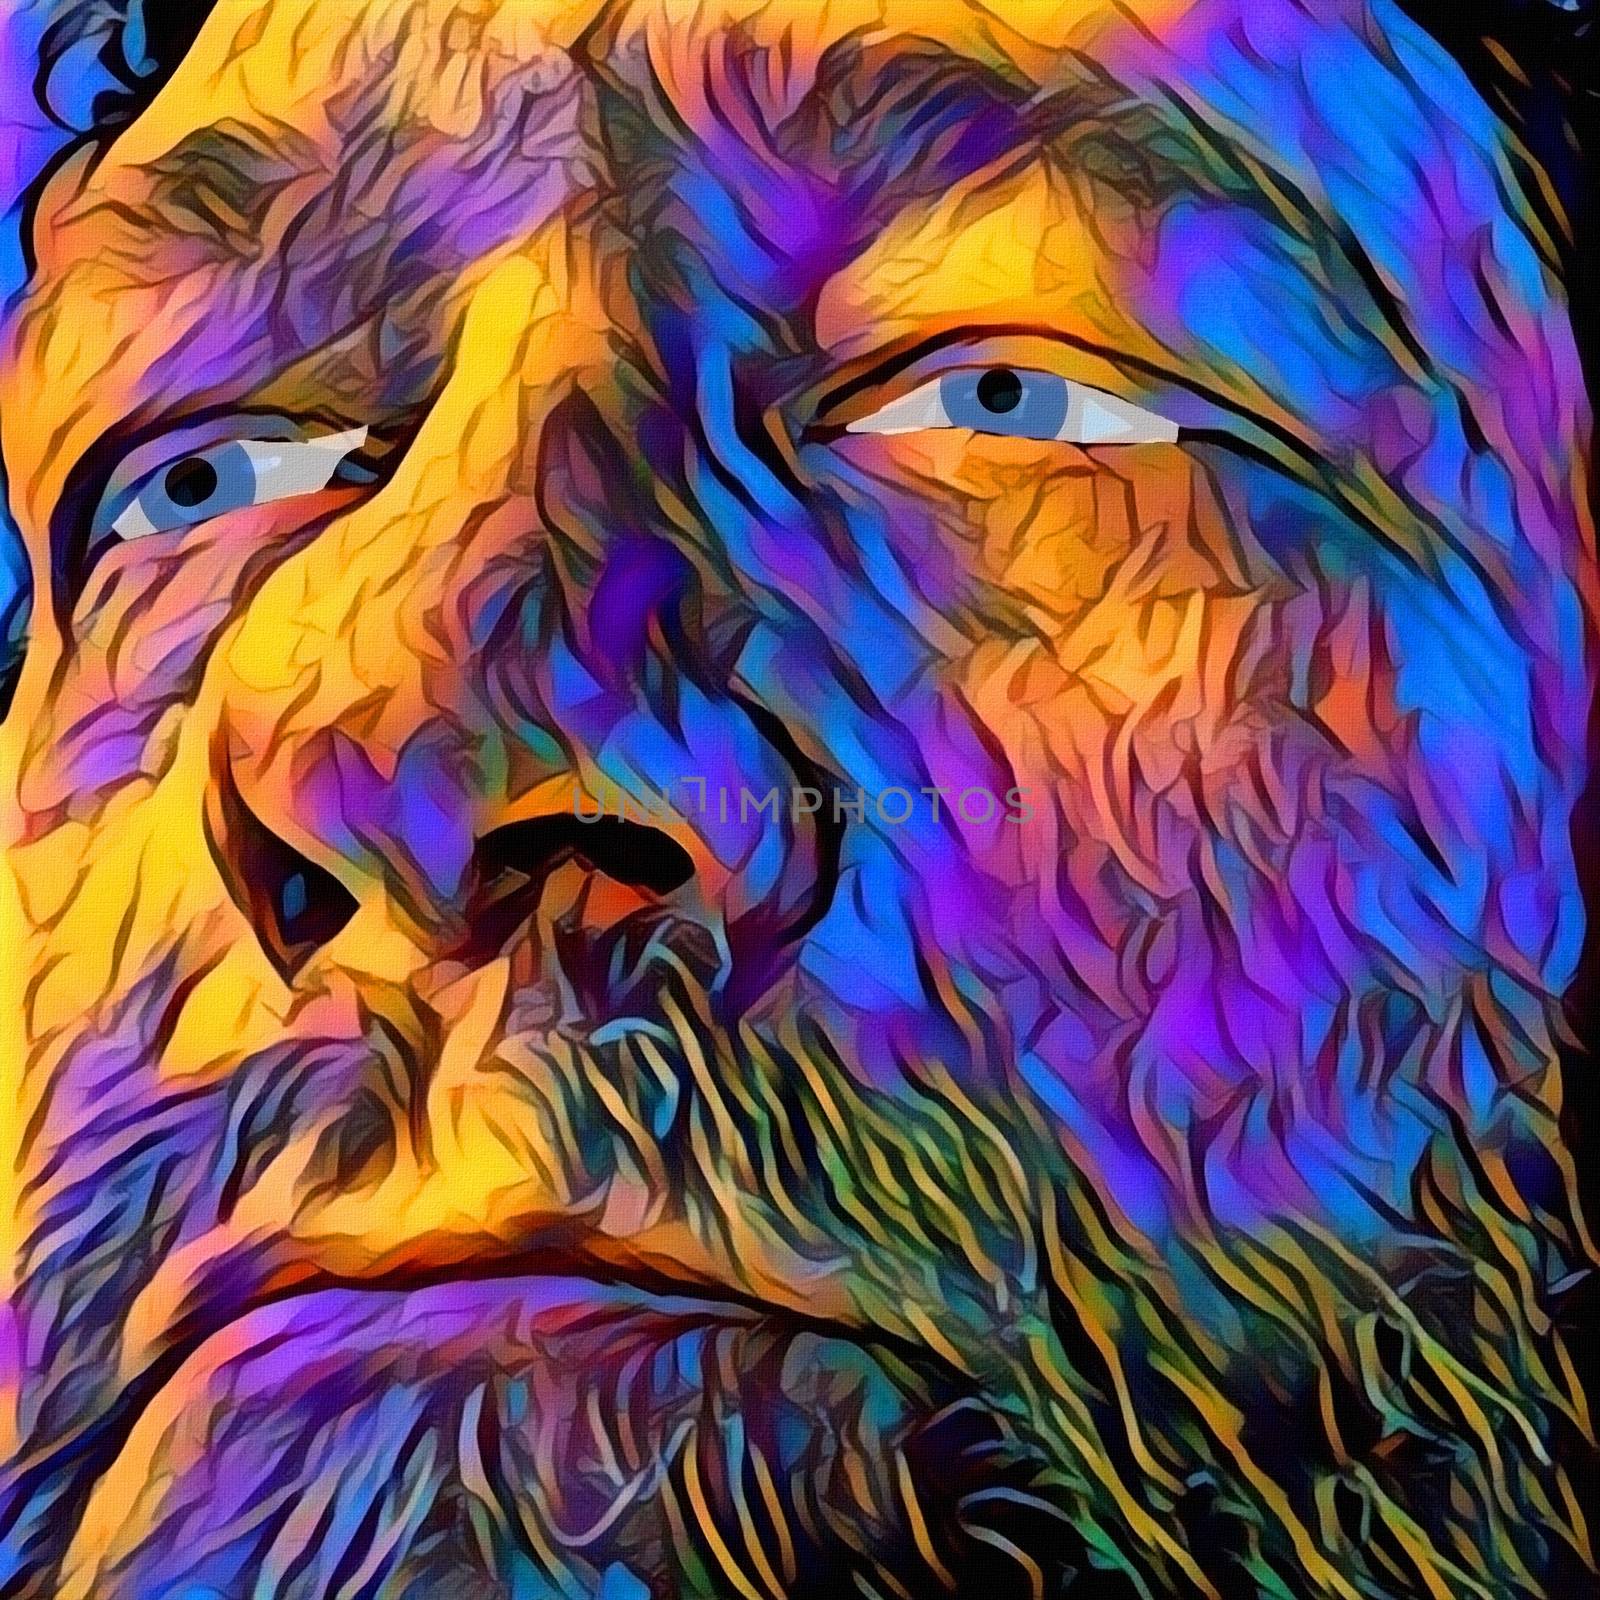 Wisdom. Man's face in purple colors.